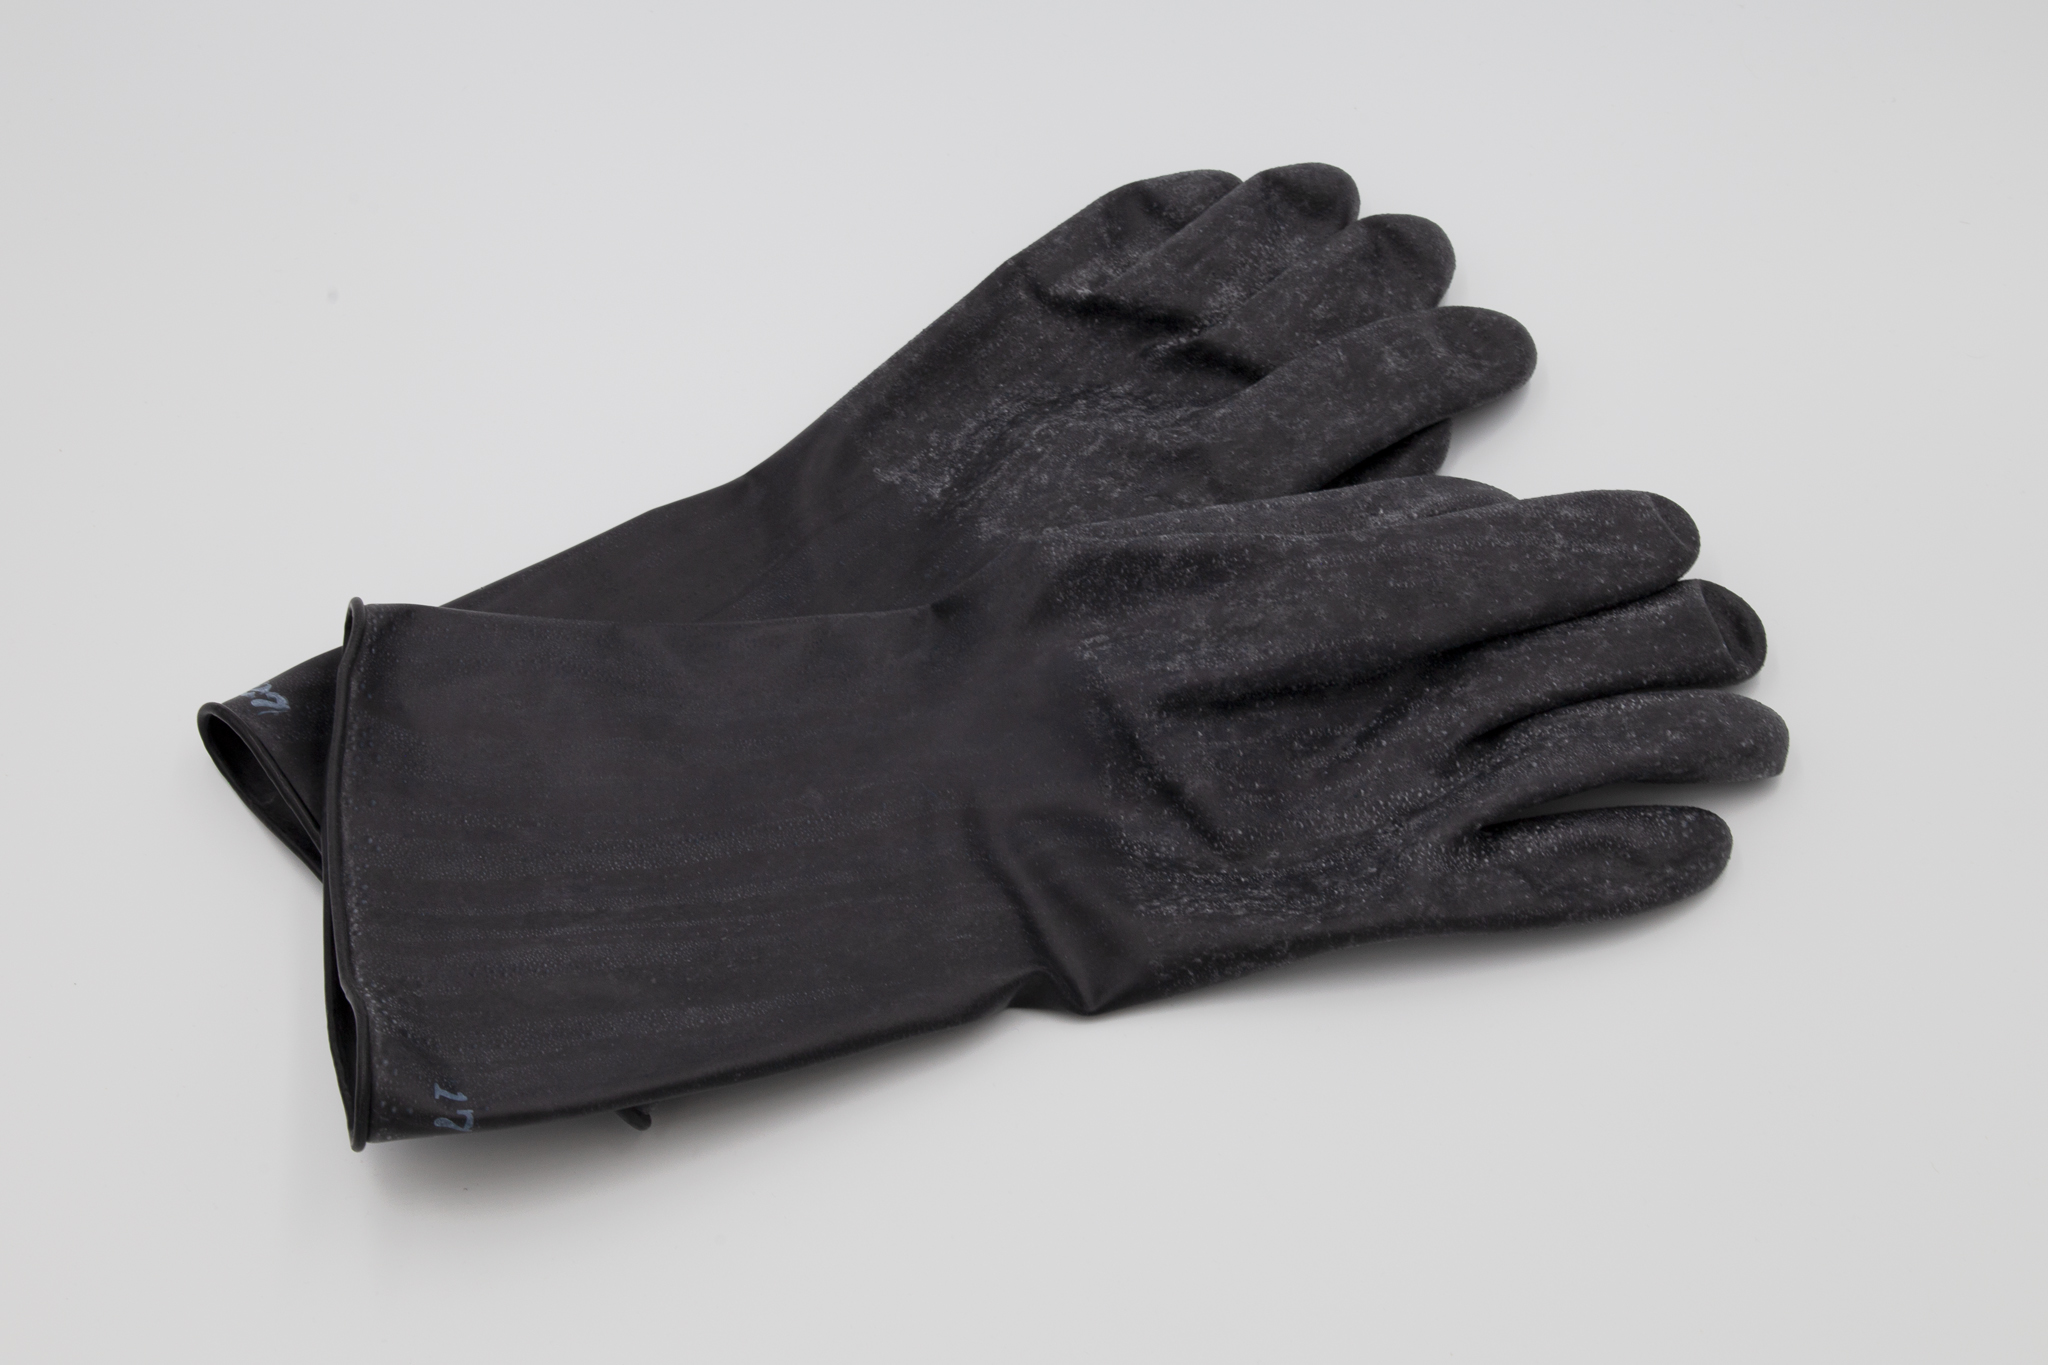 Gray gloves on white background